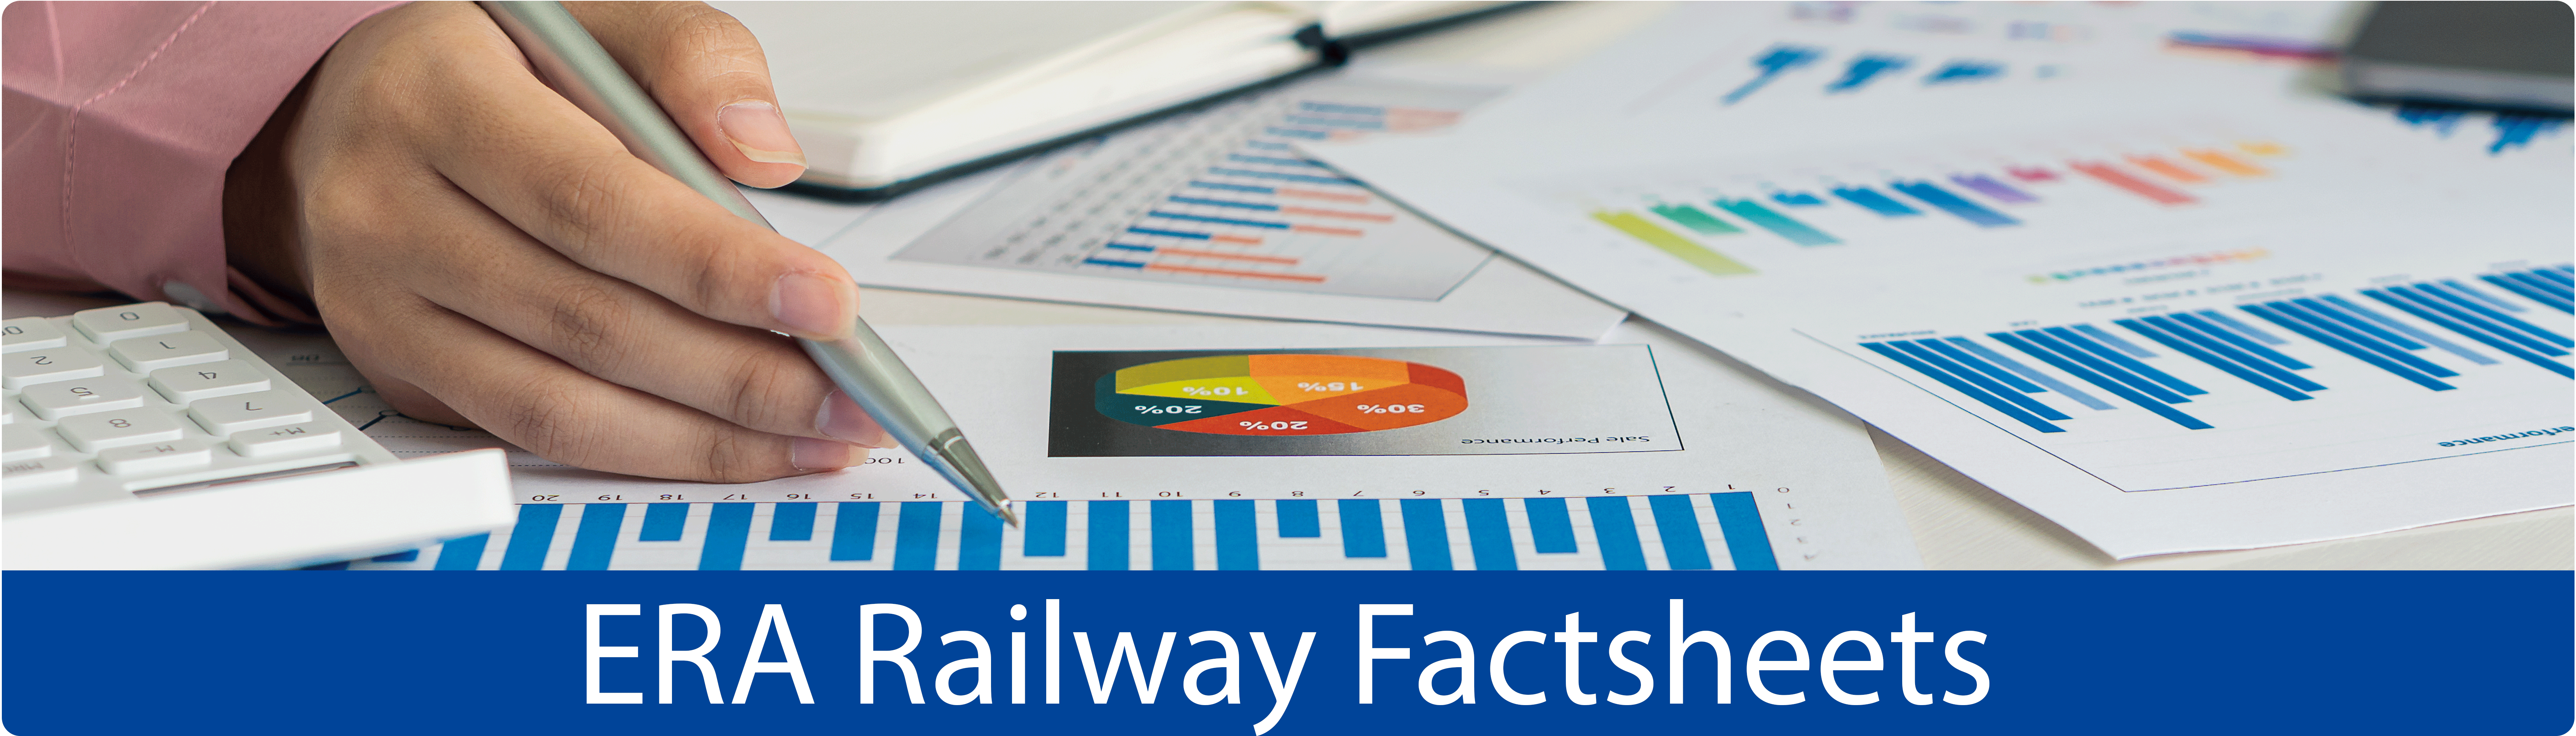 ERA Railway Factsheets right column visual v3